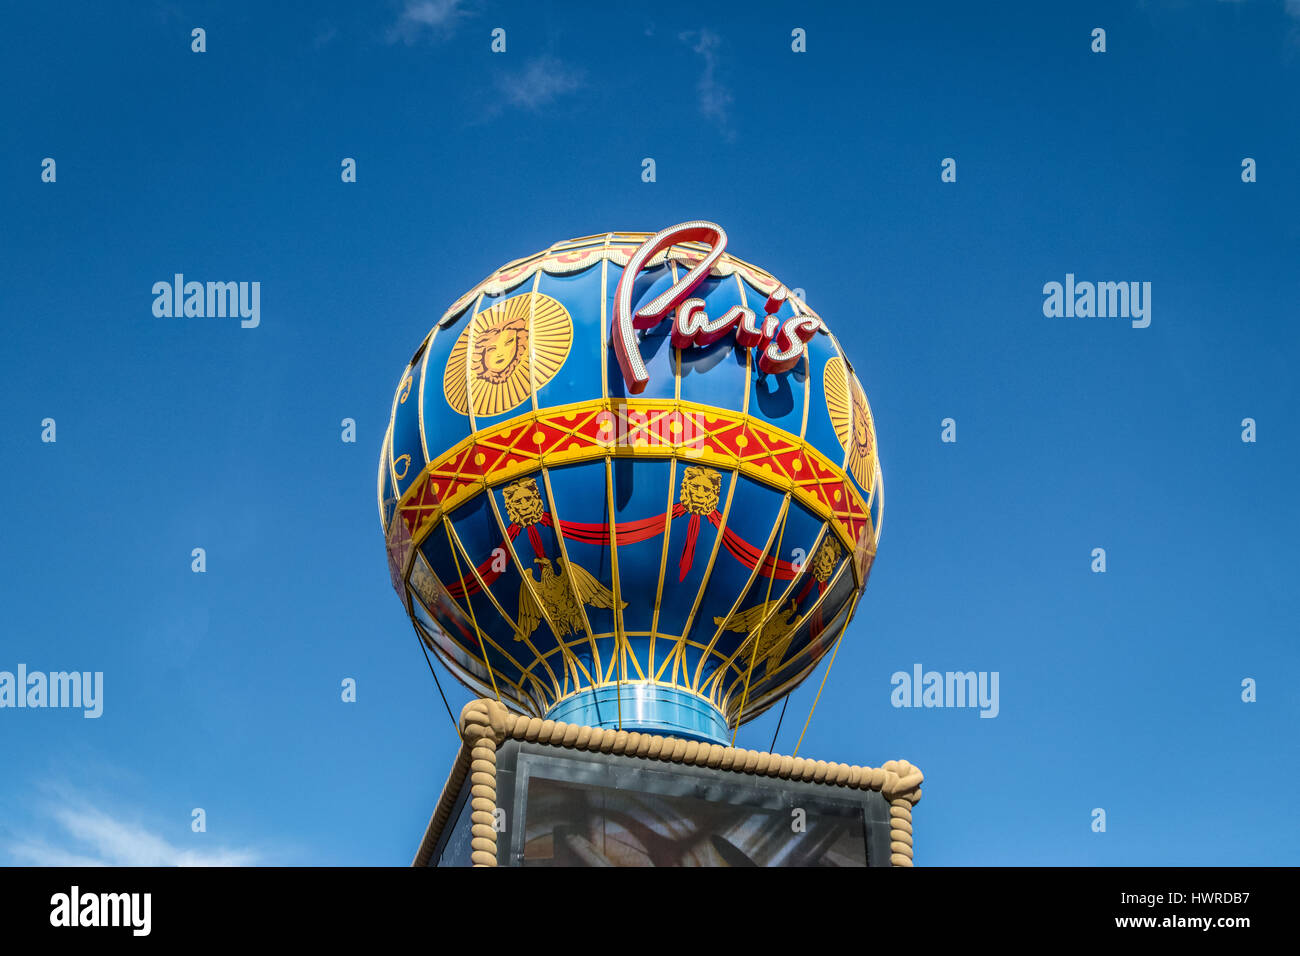 Paris Hotel and Casino Hot Air Balloon sign - Las Vegas, Nevada, USA Stock Photo